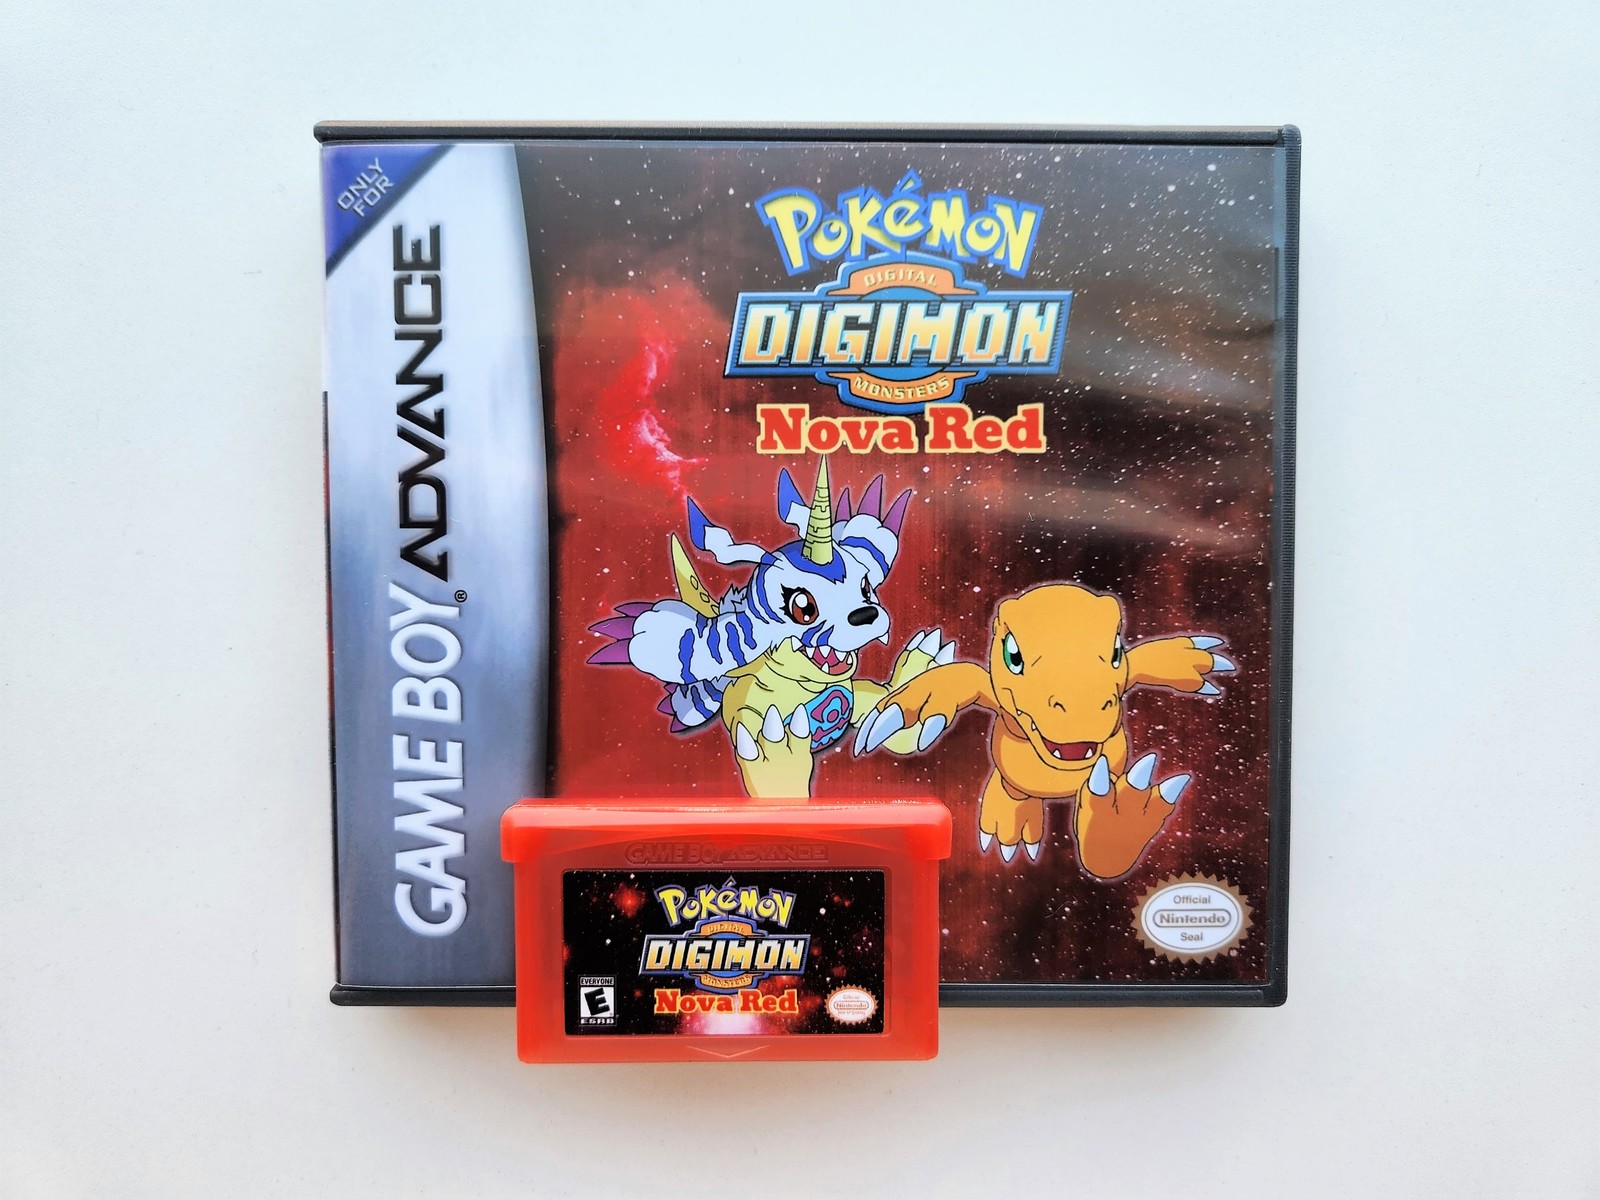 Pokemon Digimon Nova Red Game / Case - Gameboy Advance (GBA) Fire Red Mod USA